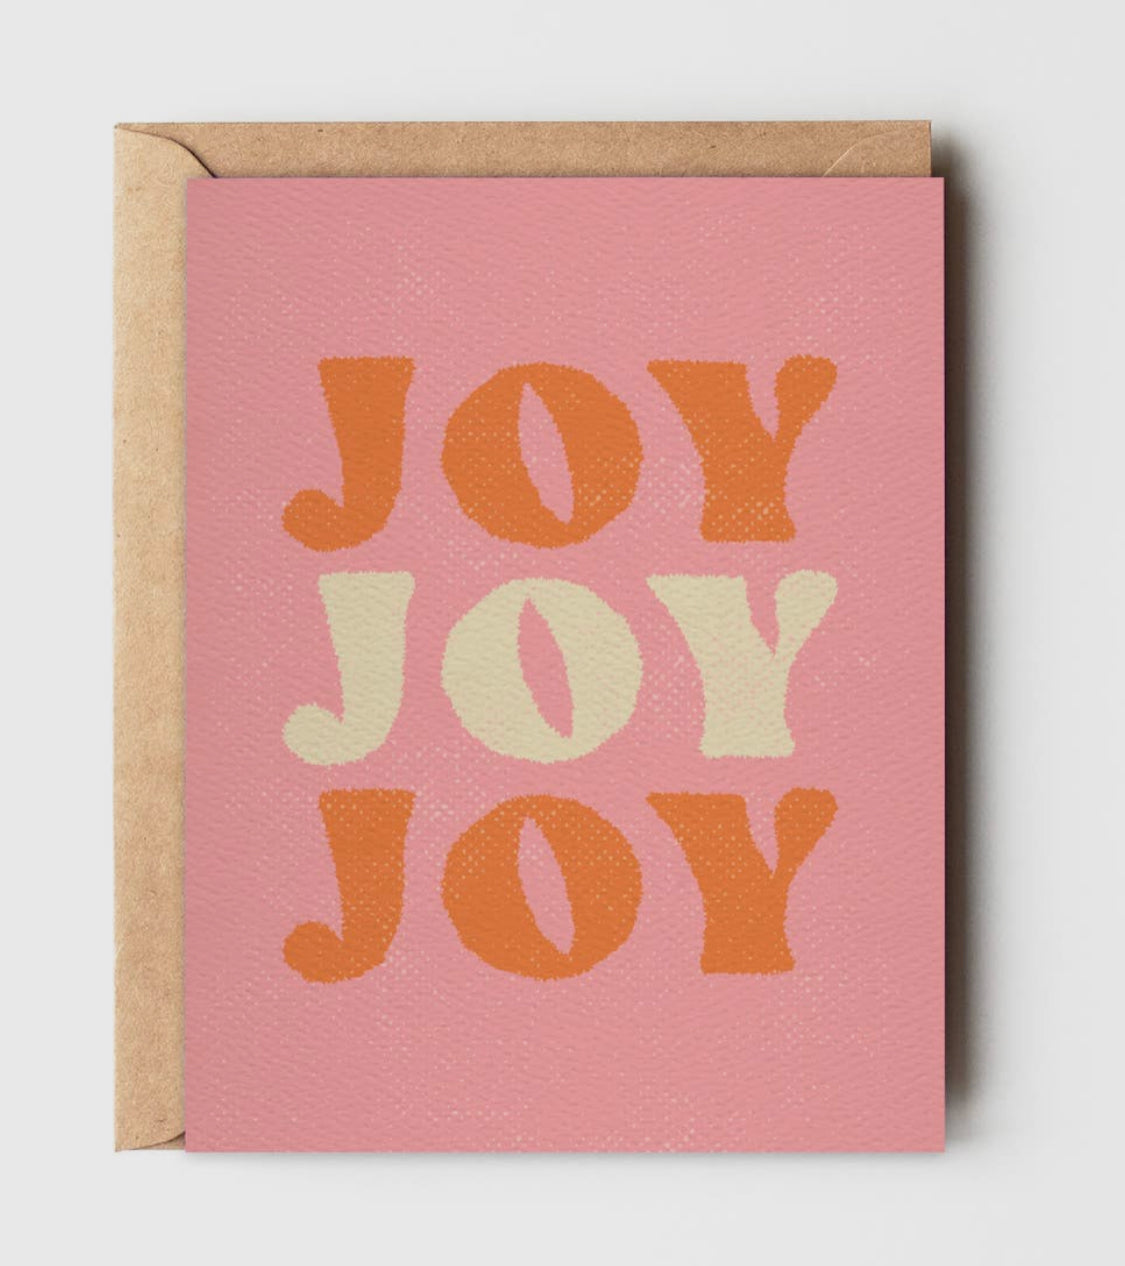 Joy Joy Joy - Fun retro holiday card